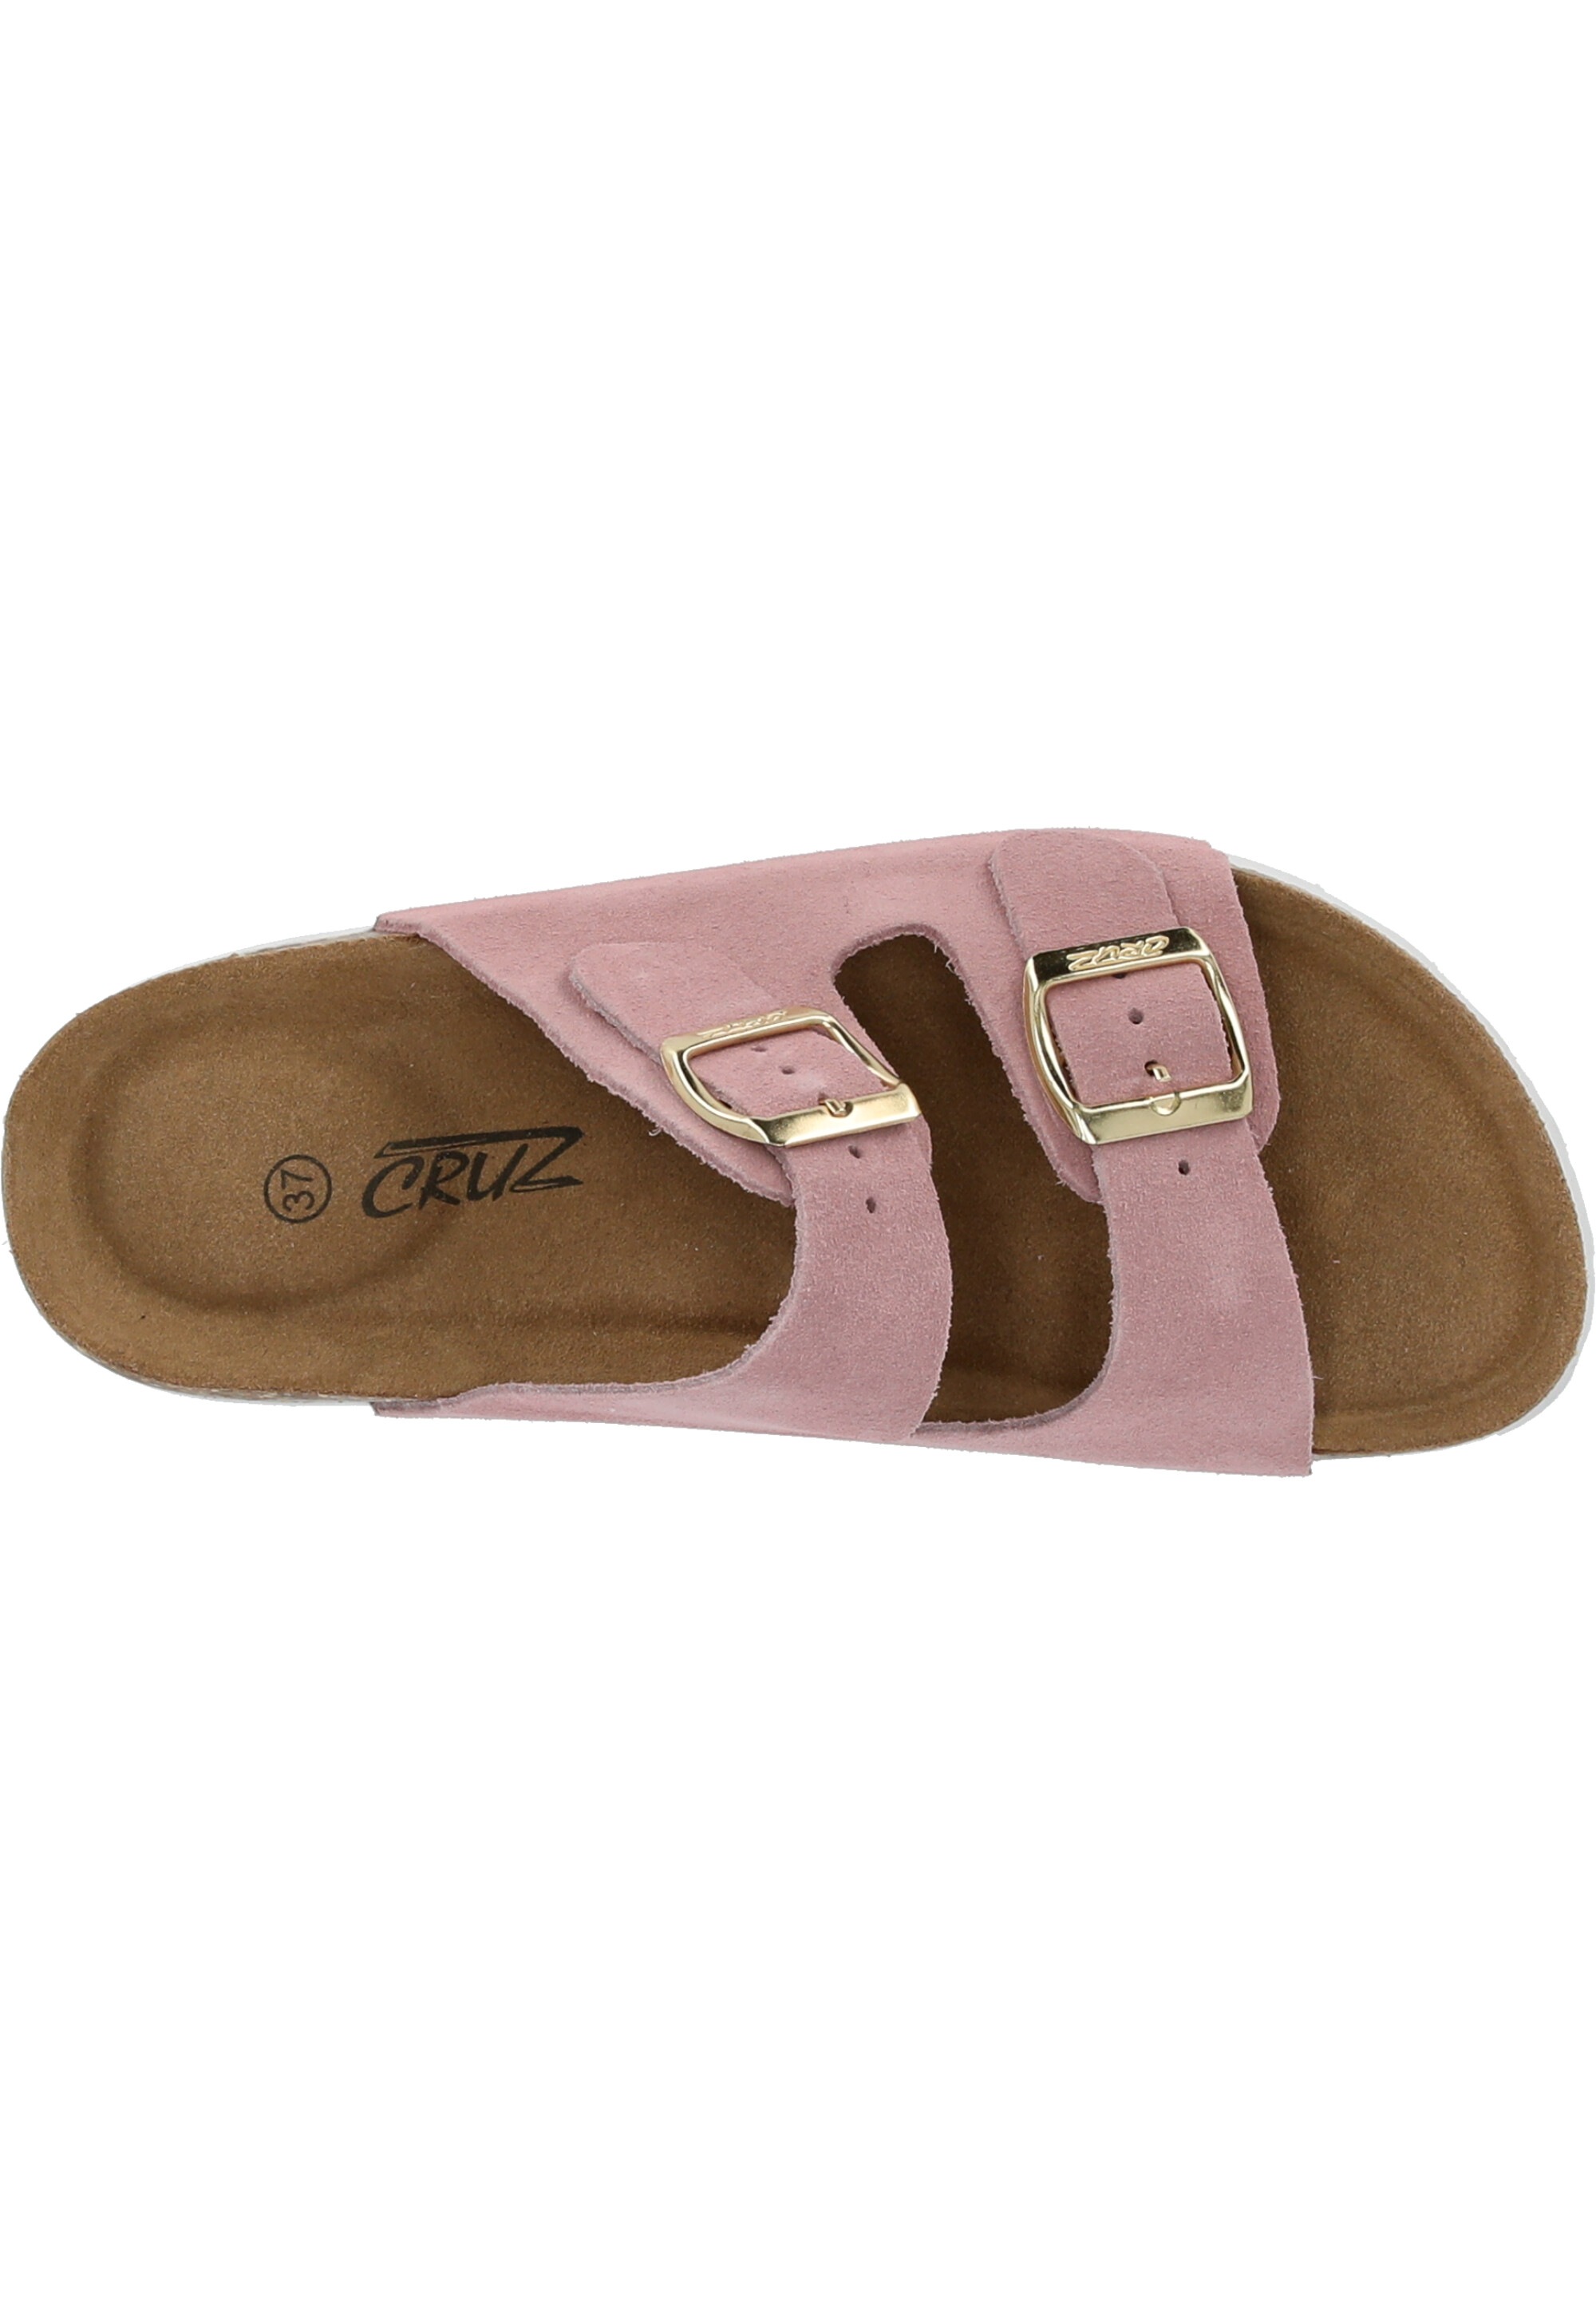 CRUZ Sandale »Bastar«, mit bequemem Komfort